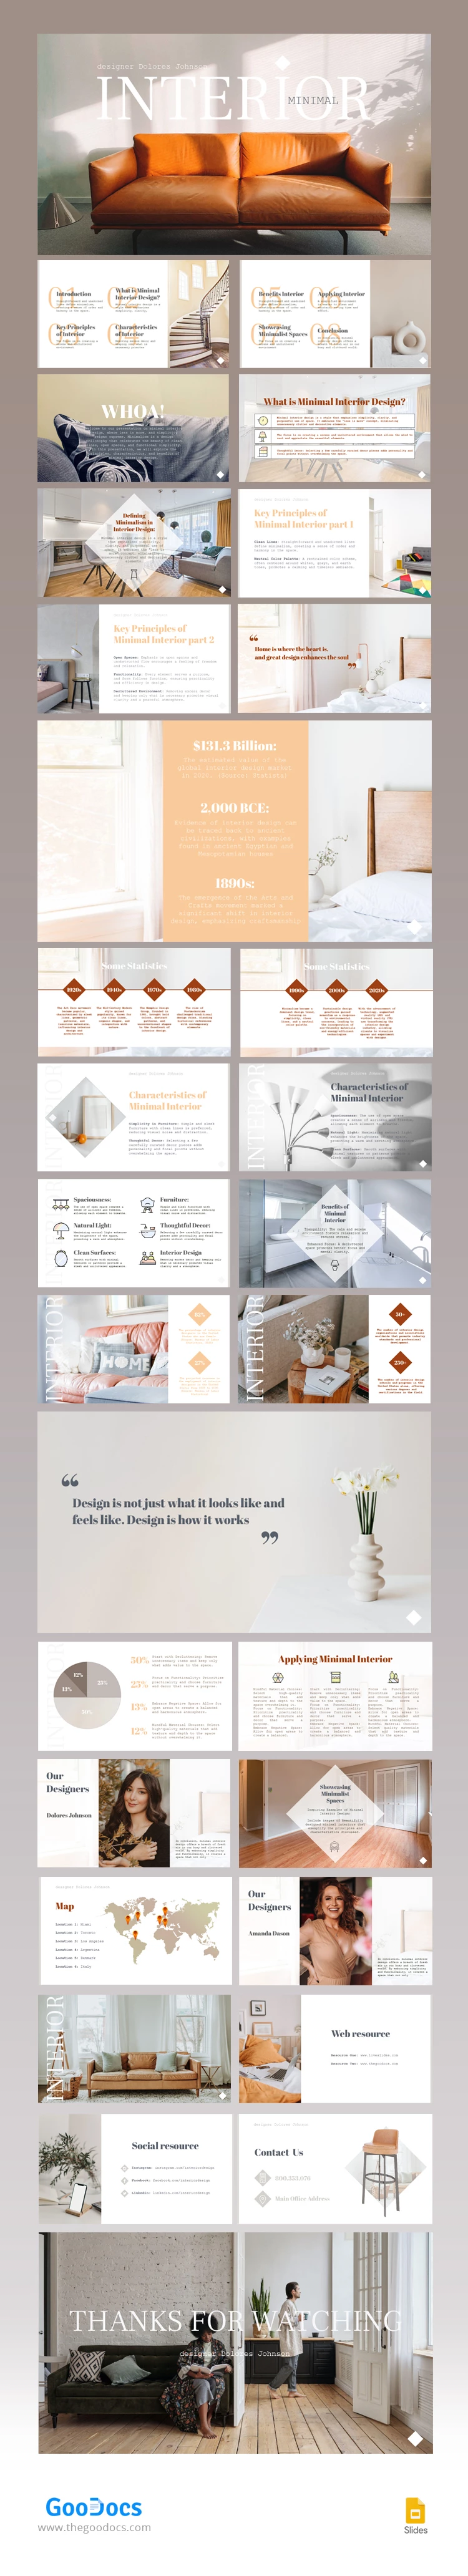 Design de interiores minimalista - free Google Docs Template - 10066995